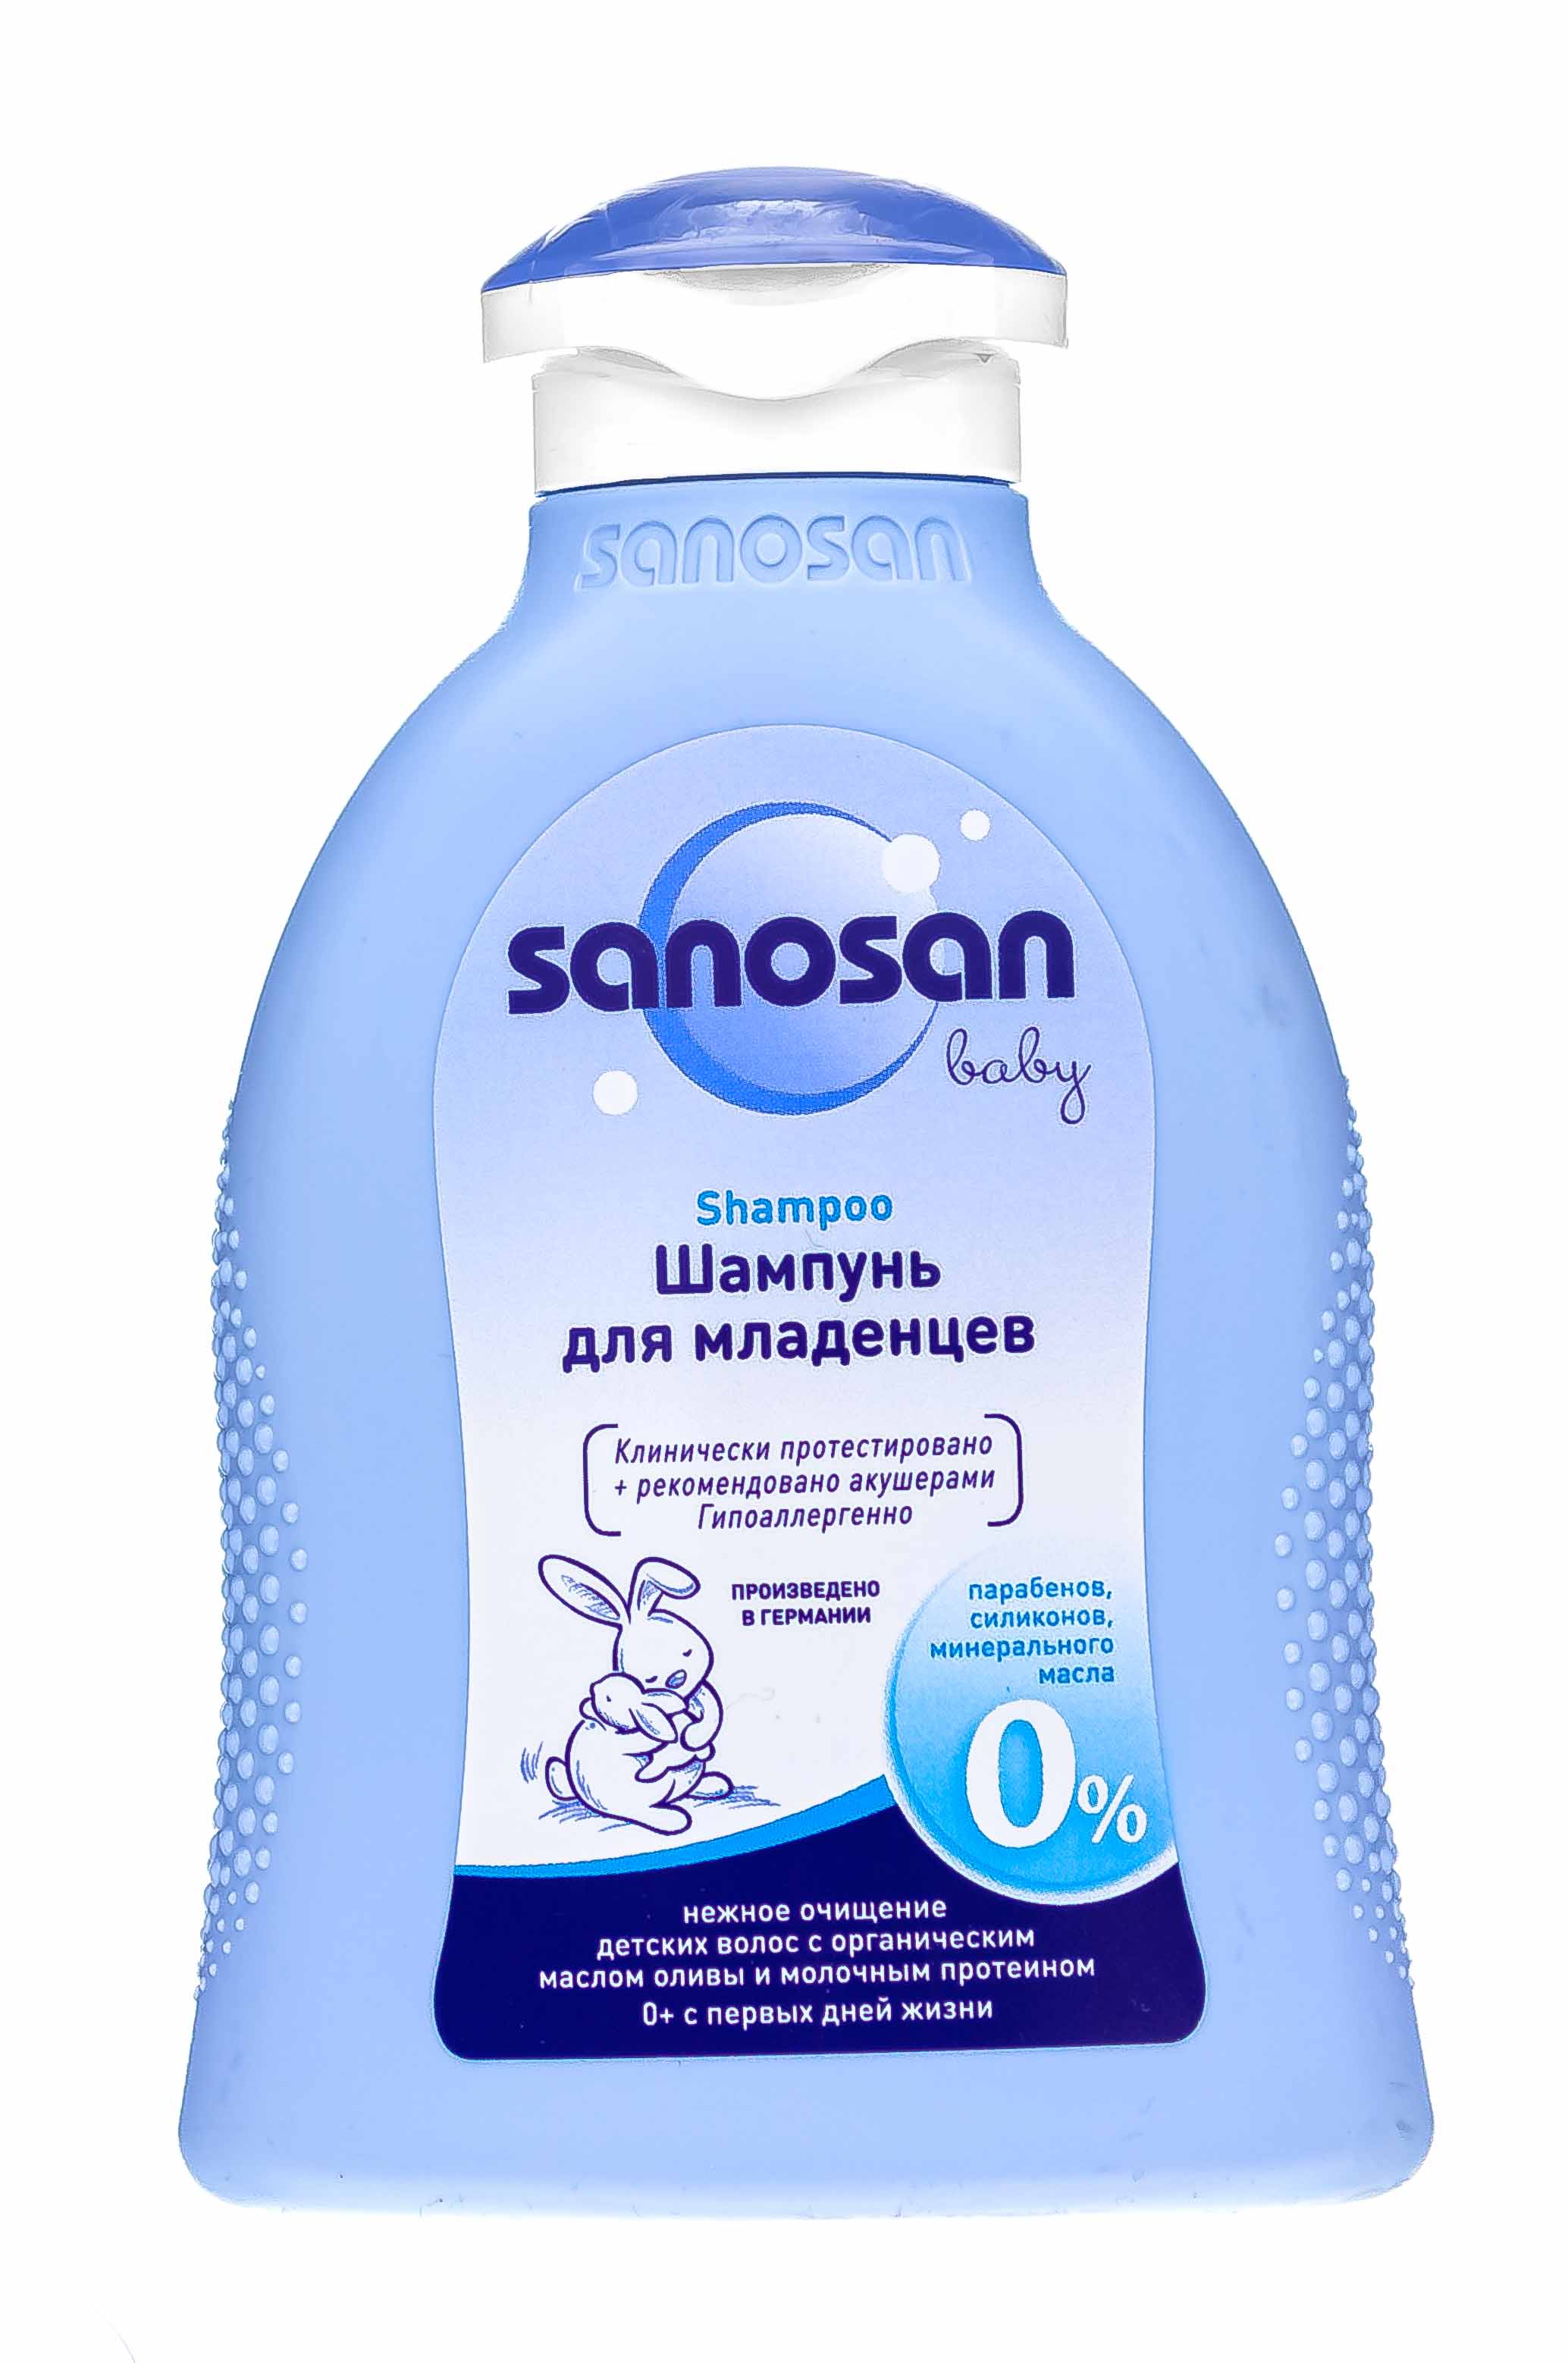 Sanosan Шампунь для младенцев, 200 мл (Sanosan, Умывание)